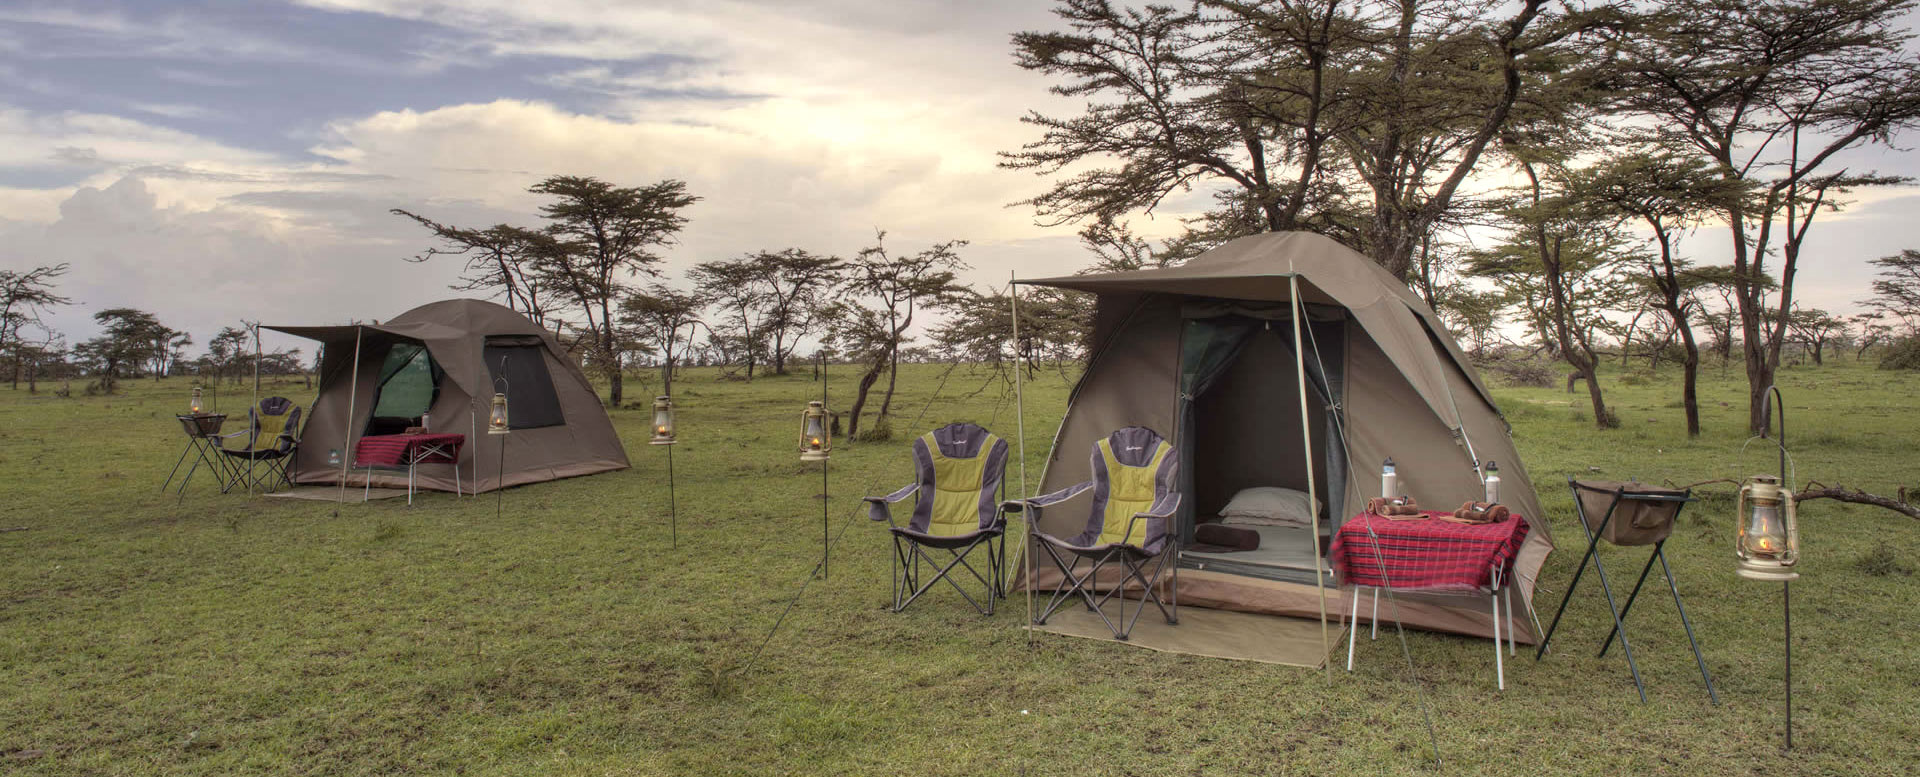 Tanzania camping plus